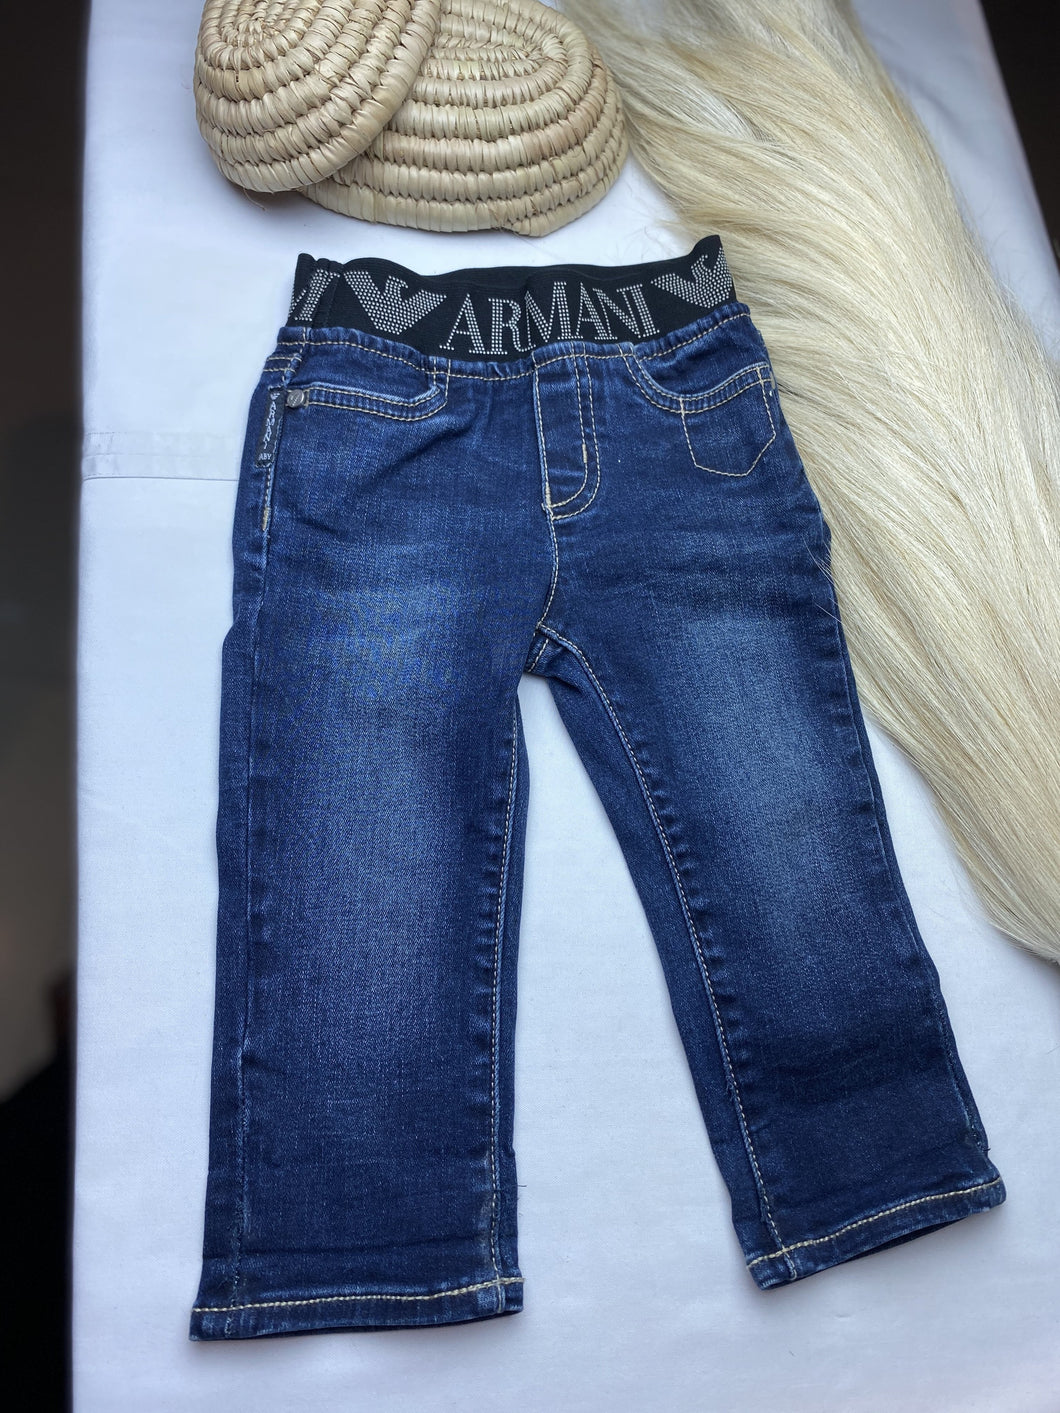 Denim Armani Jeans Unisex - 6 to 12 months